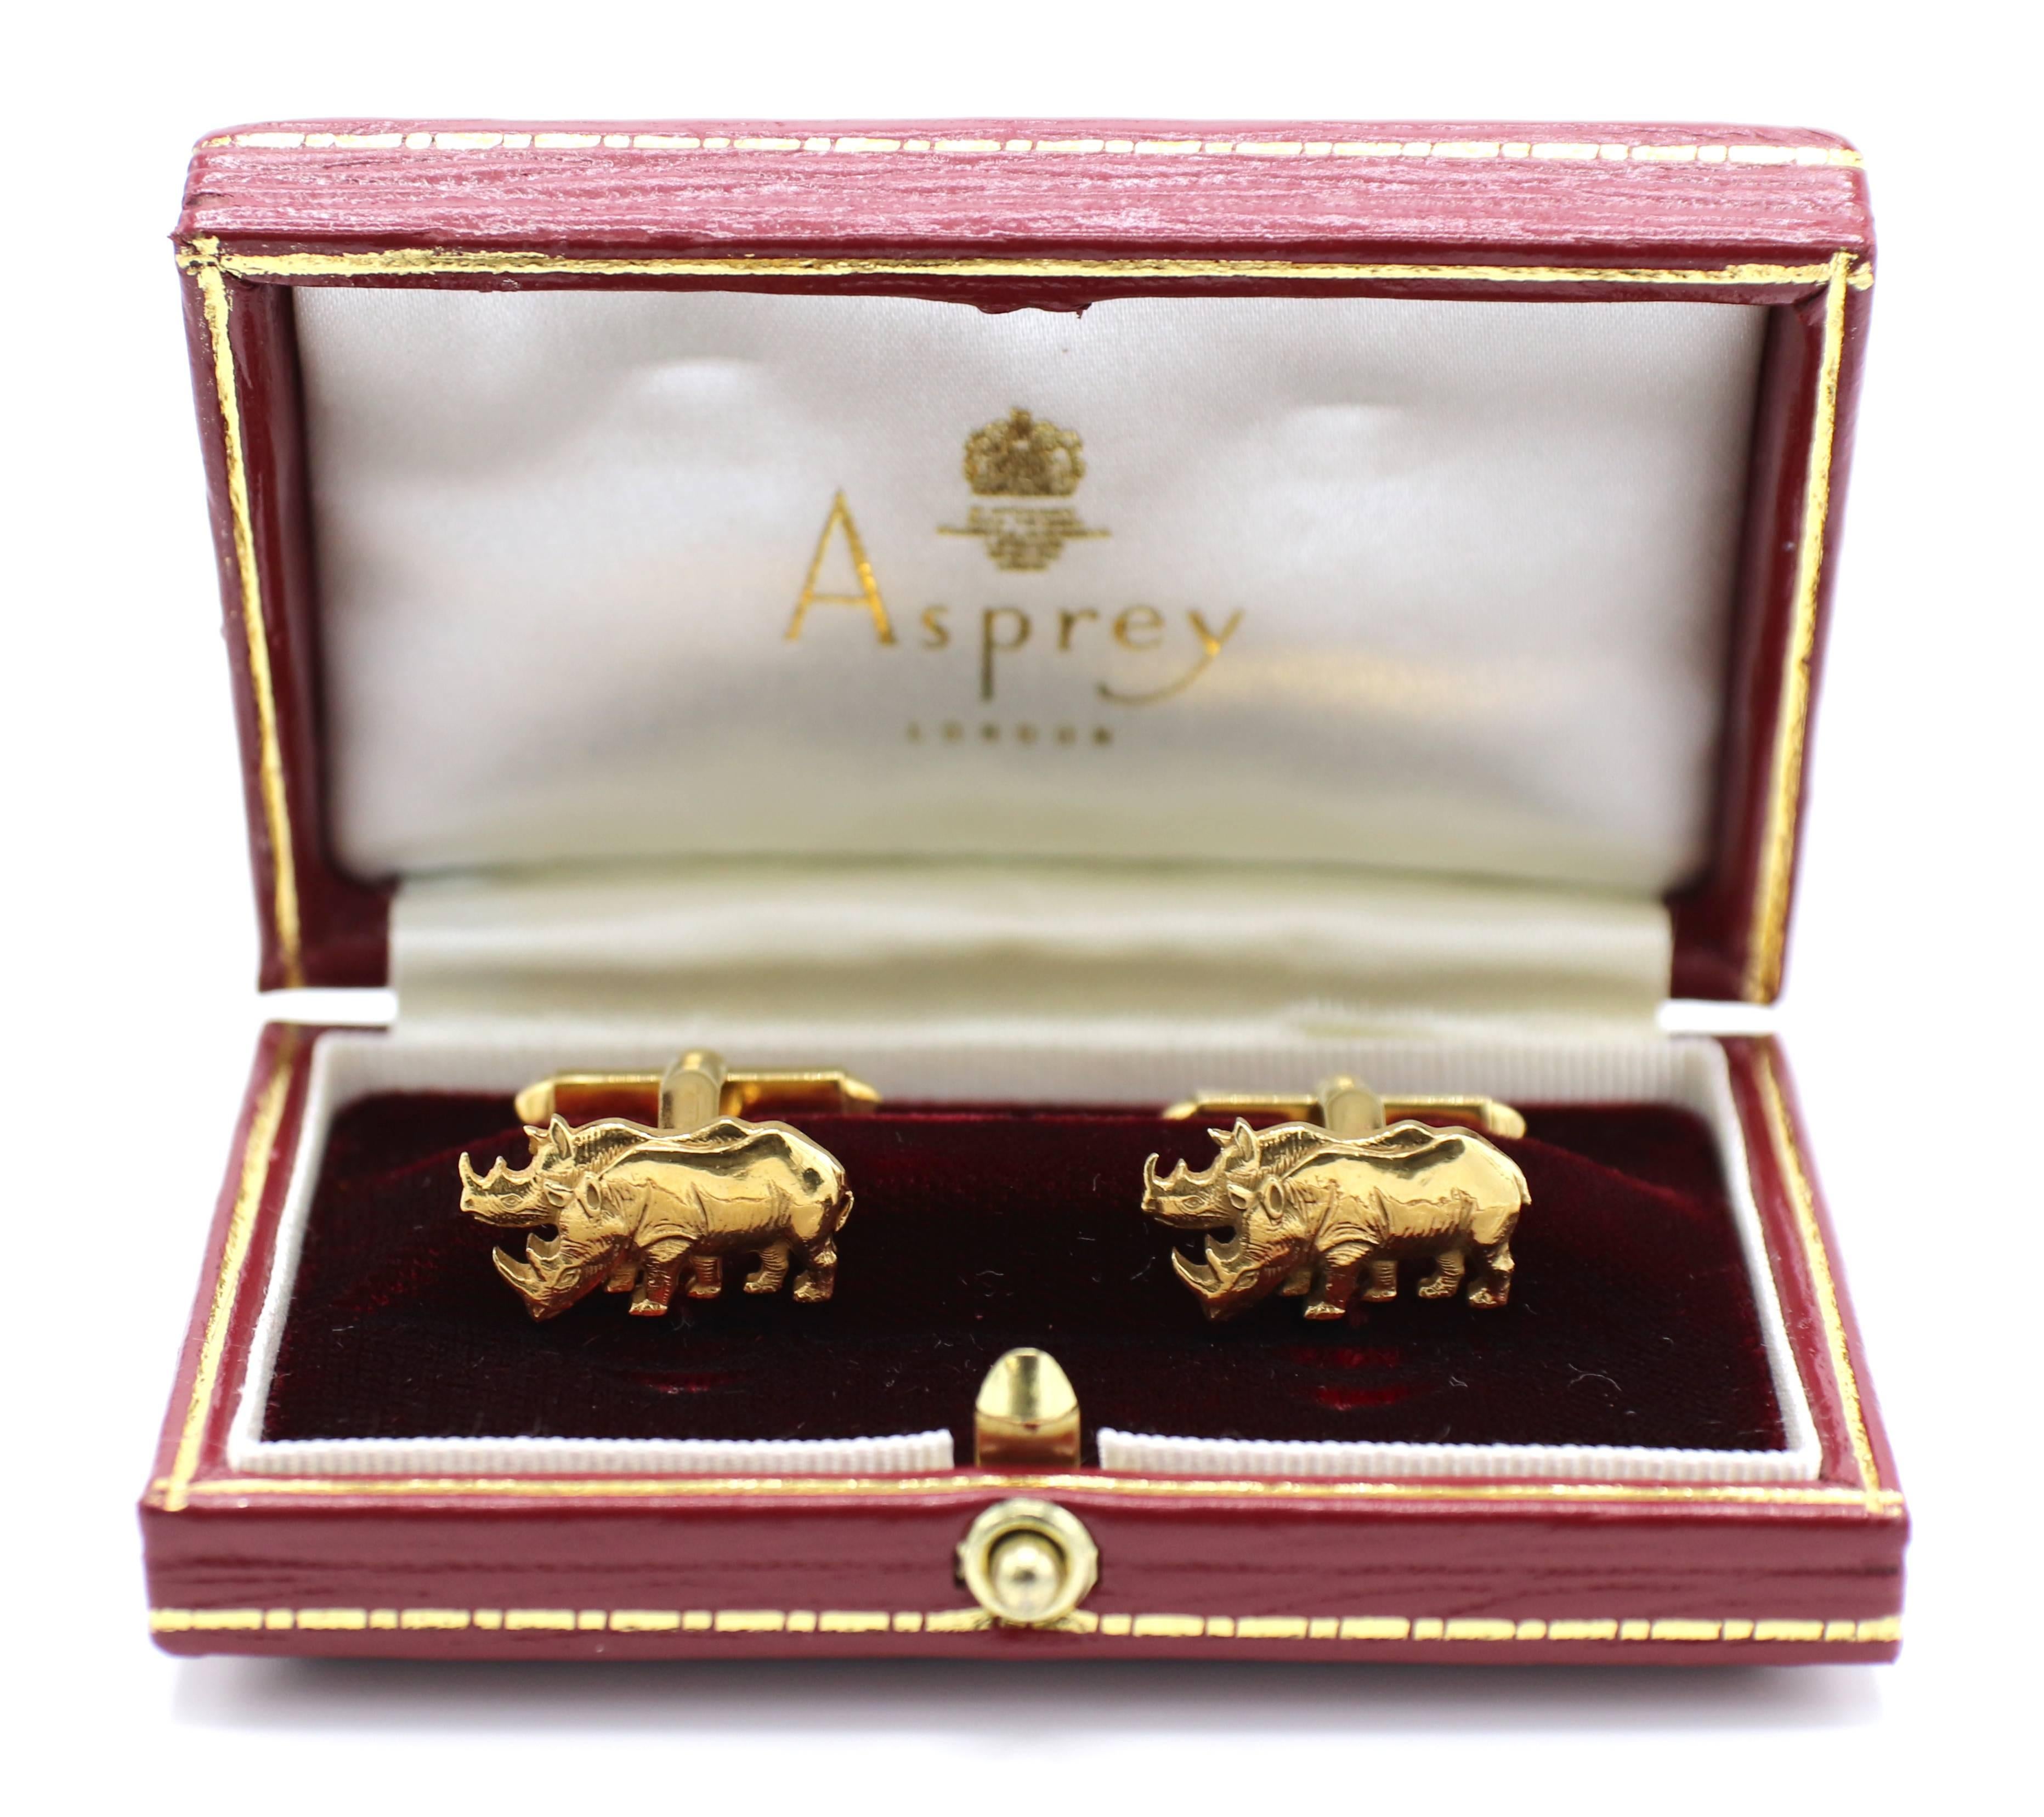 Asprey London 18 Karat Yellow Gold Rhinoceros Animal Cufflinks 
Metal: 18k yellow gold
Weight: 13.4 grams
Length: 19mm
Width: 12.8mm
